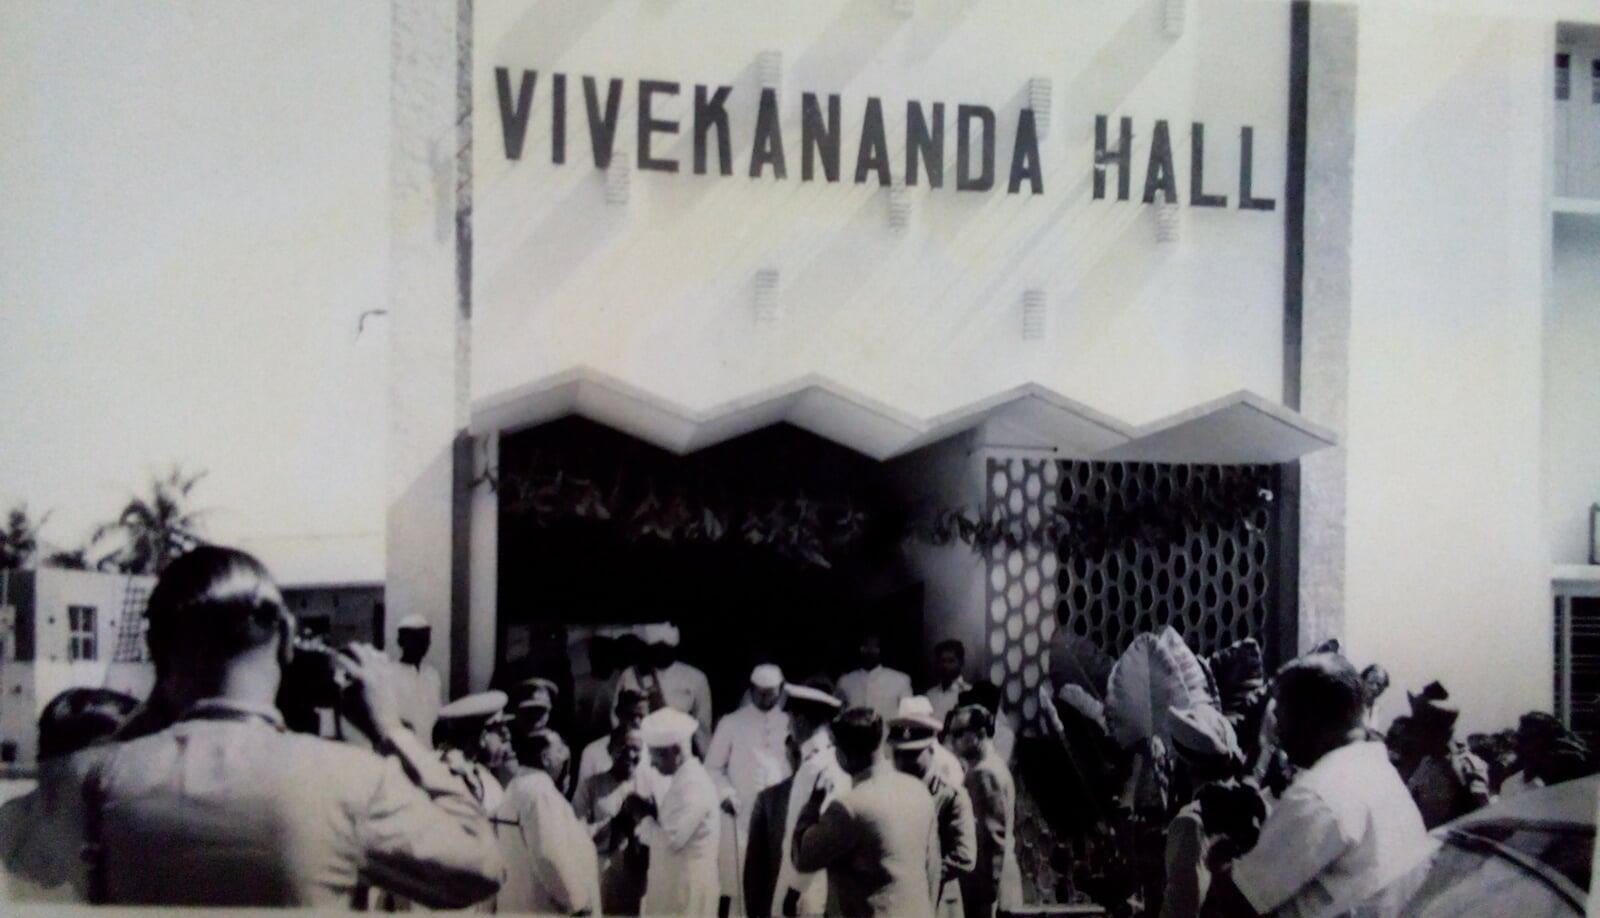 Inauguration of Vivekananda Hall in 1963 by Dr. Sarvepalli Radhakrishnan, the then President of India